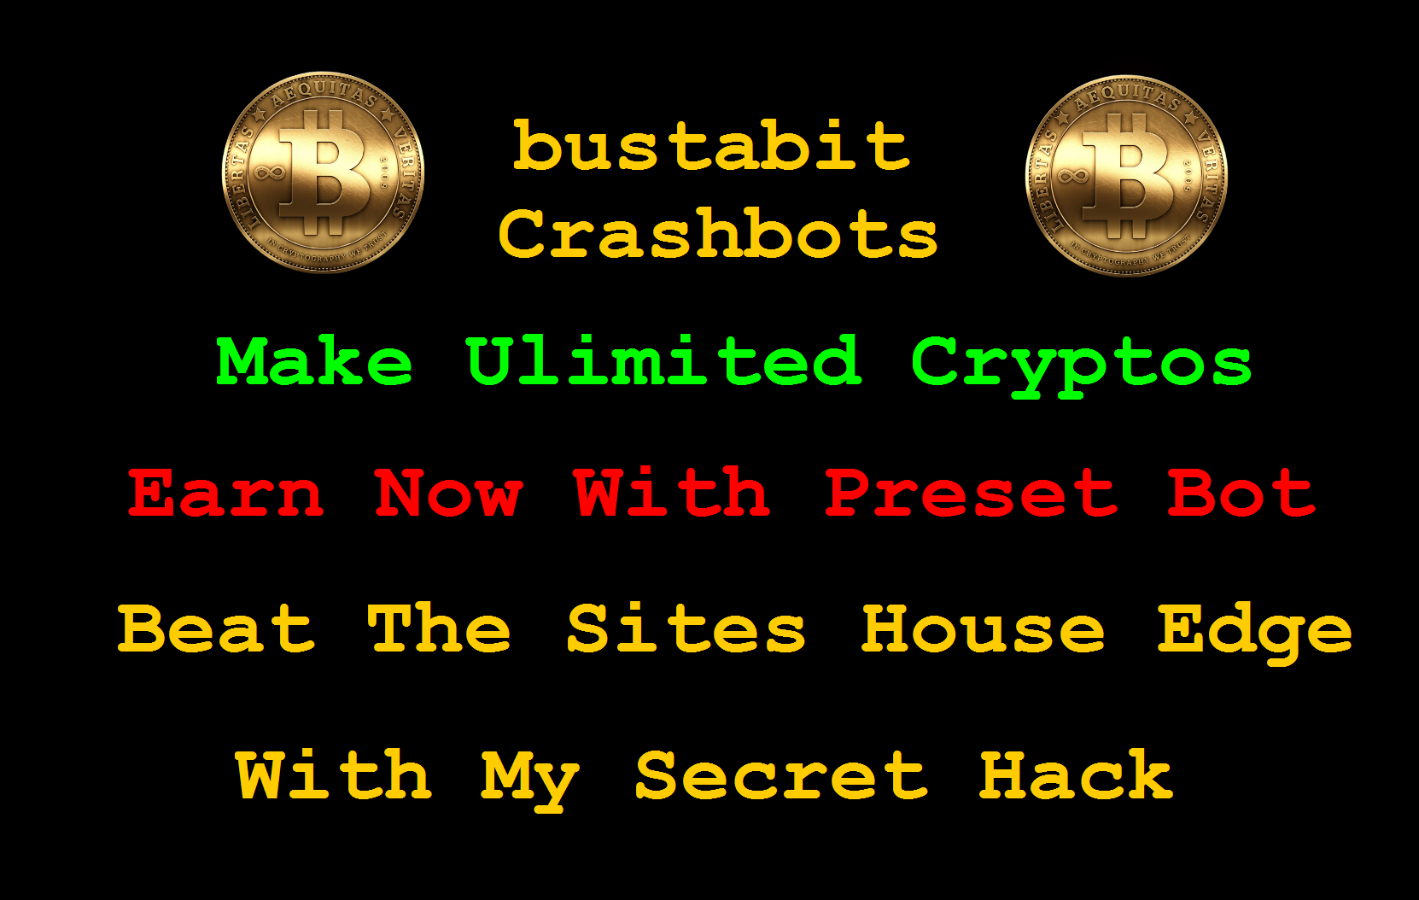 Bustabit Crashbot Method To Make Cryptos / $30